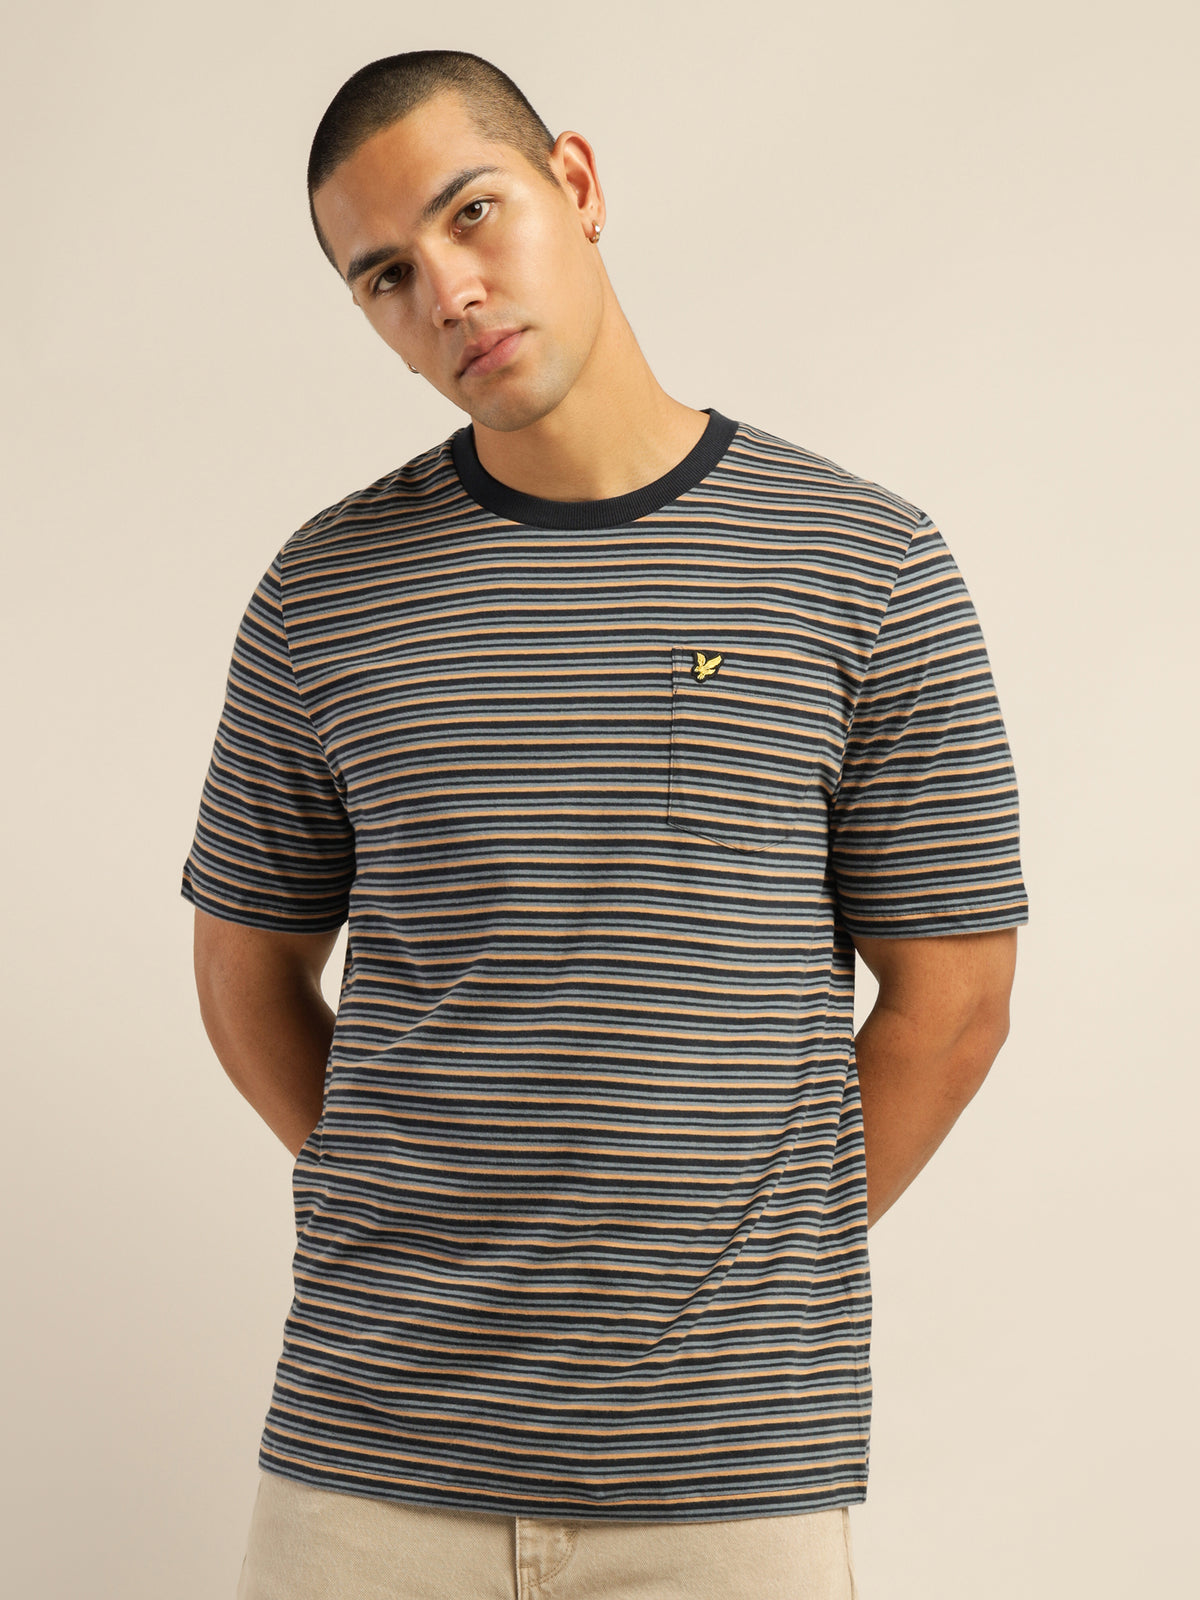 Brushed Stripe T-Shirt in Navy